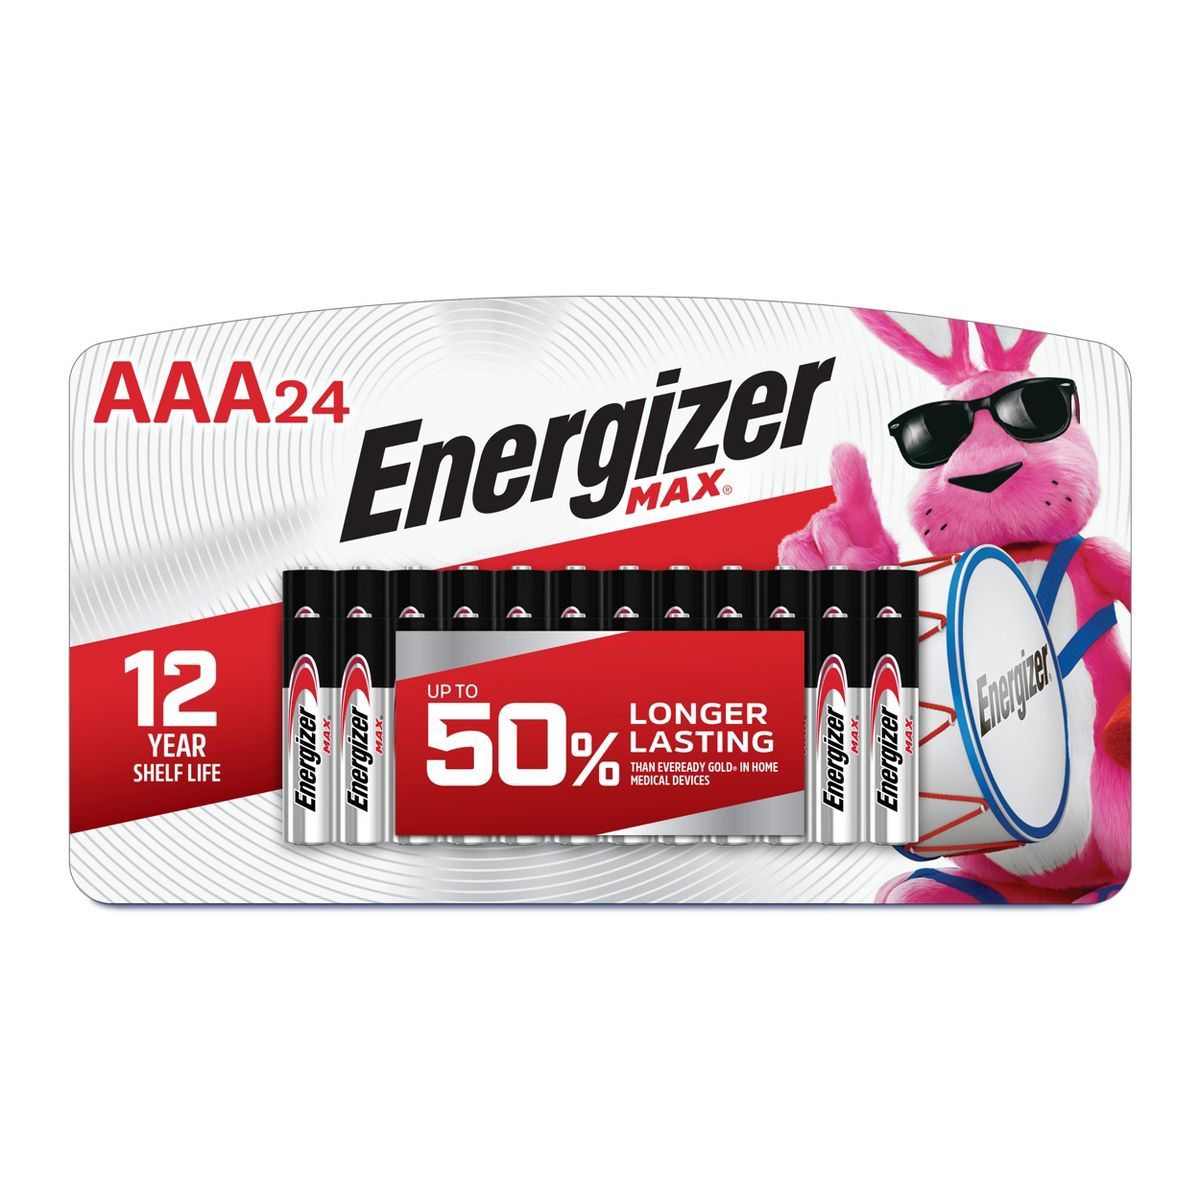 Energizer Max AAA Batteries - Alkaline Battery | Target